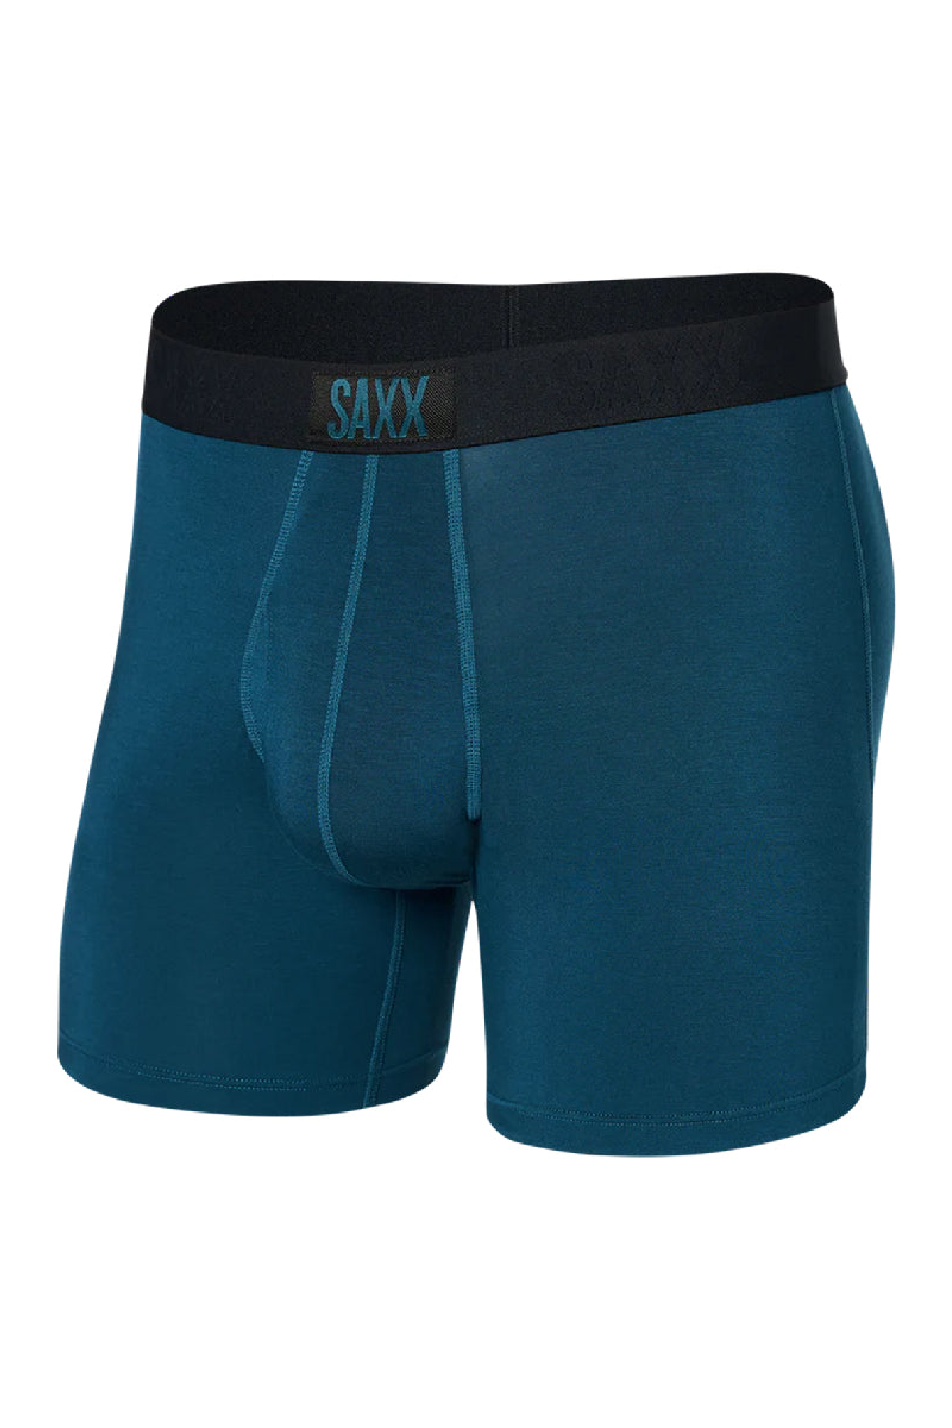 SAXX Men's Ultra Soft Boxer Brief Fly